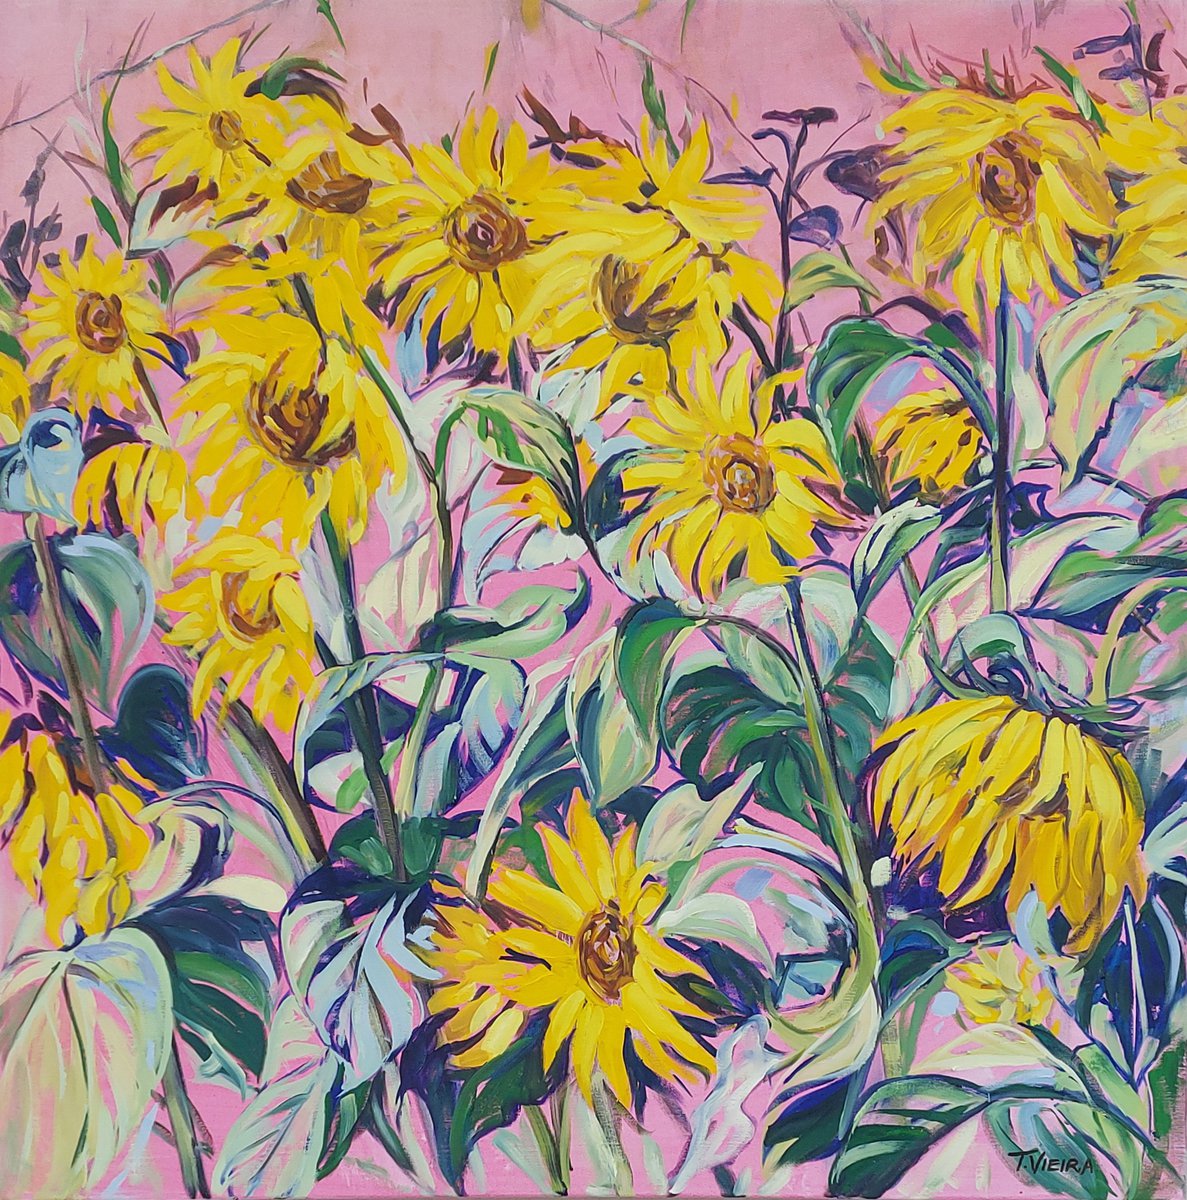 Fields of Sunflowers by Tamara Vieira